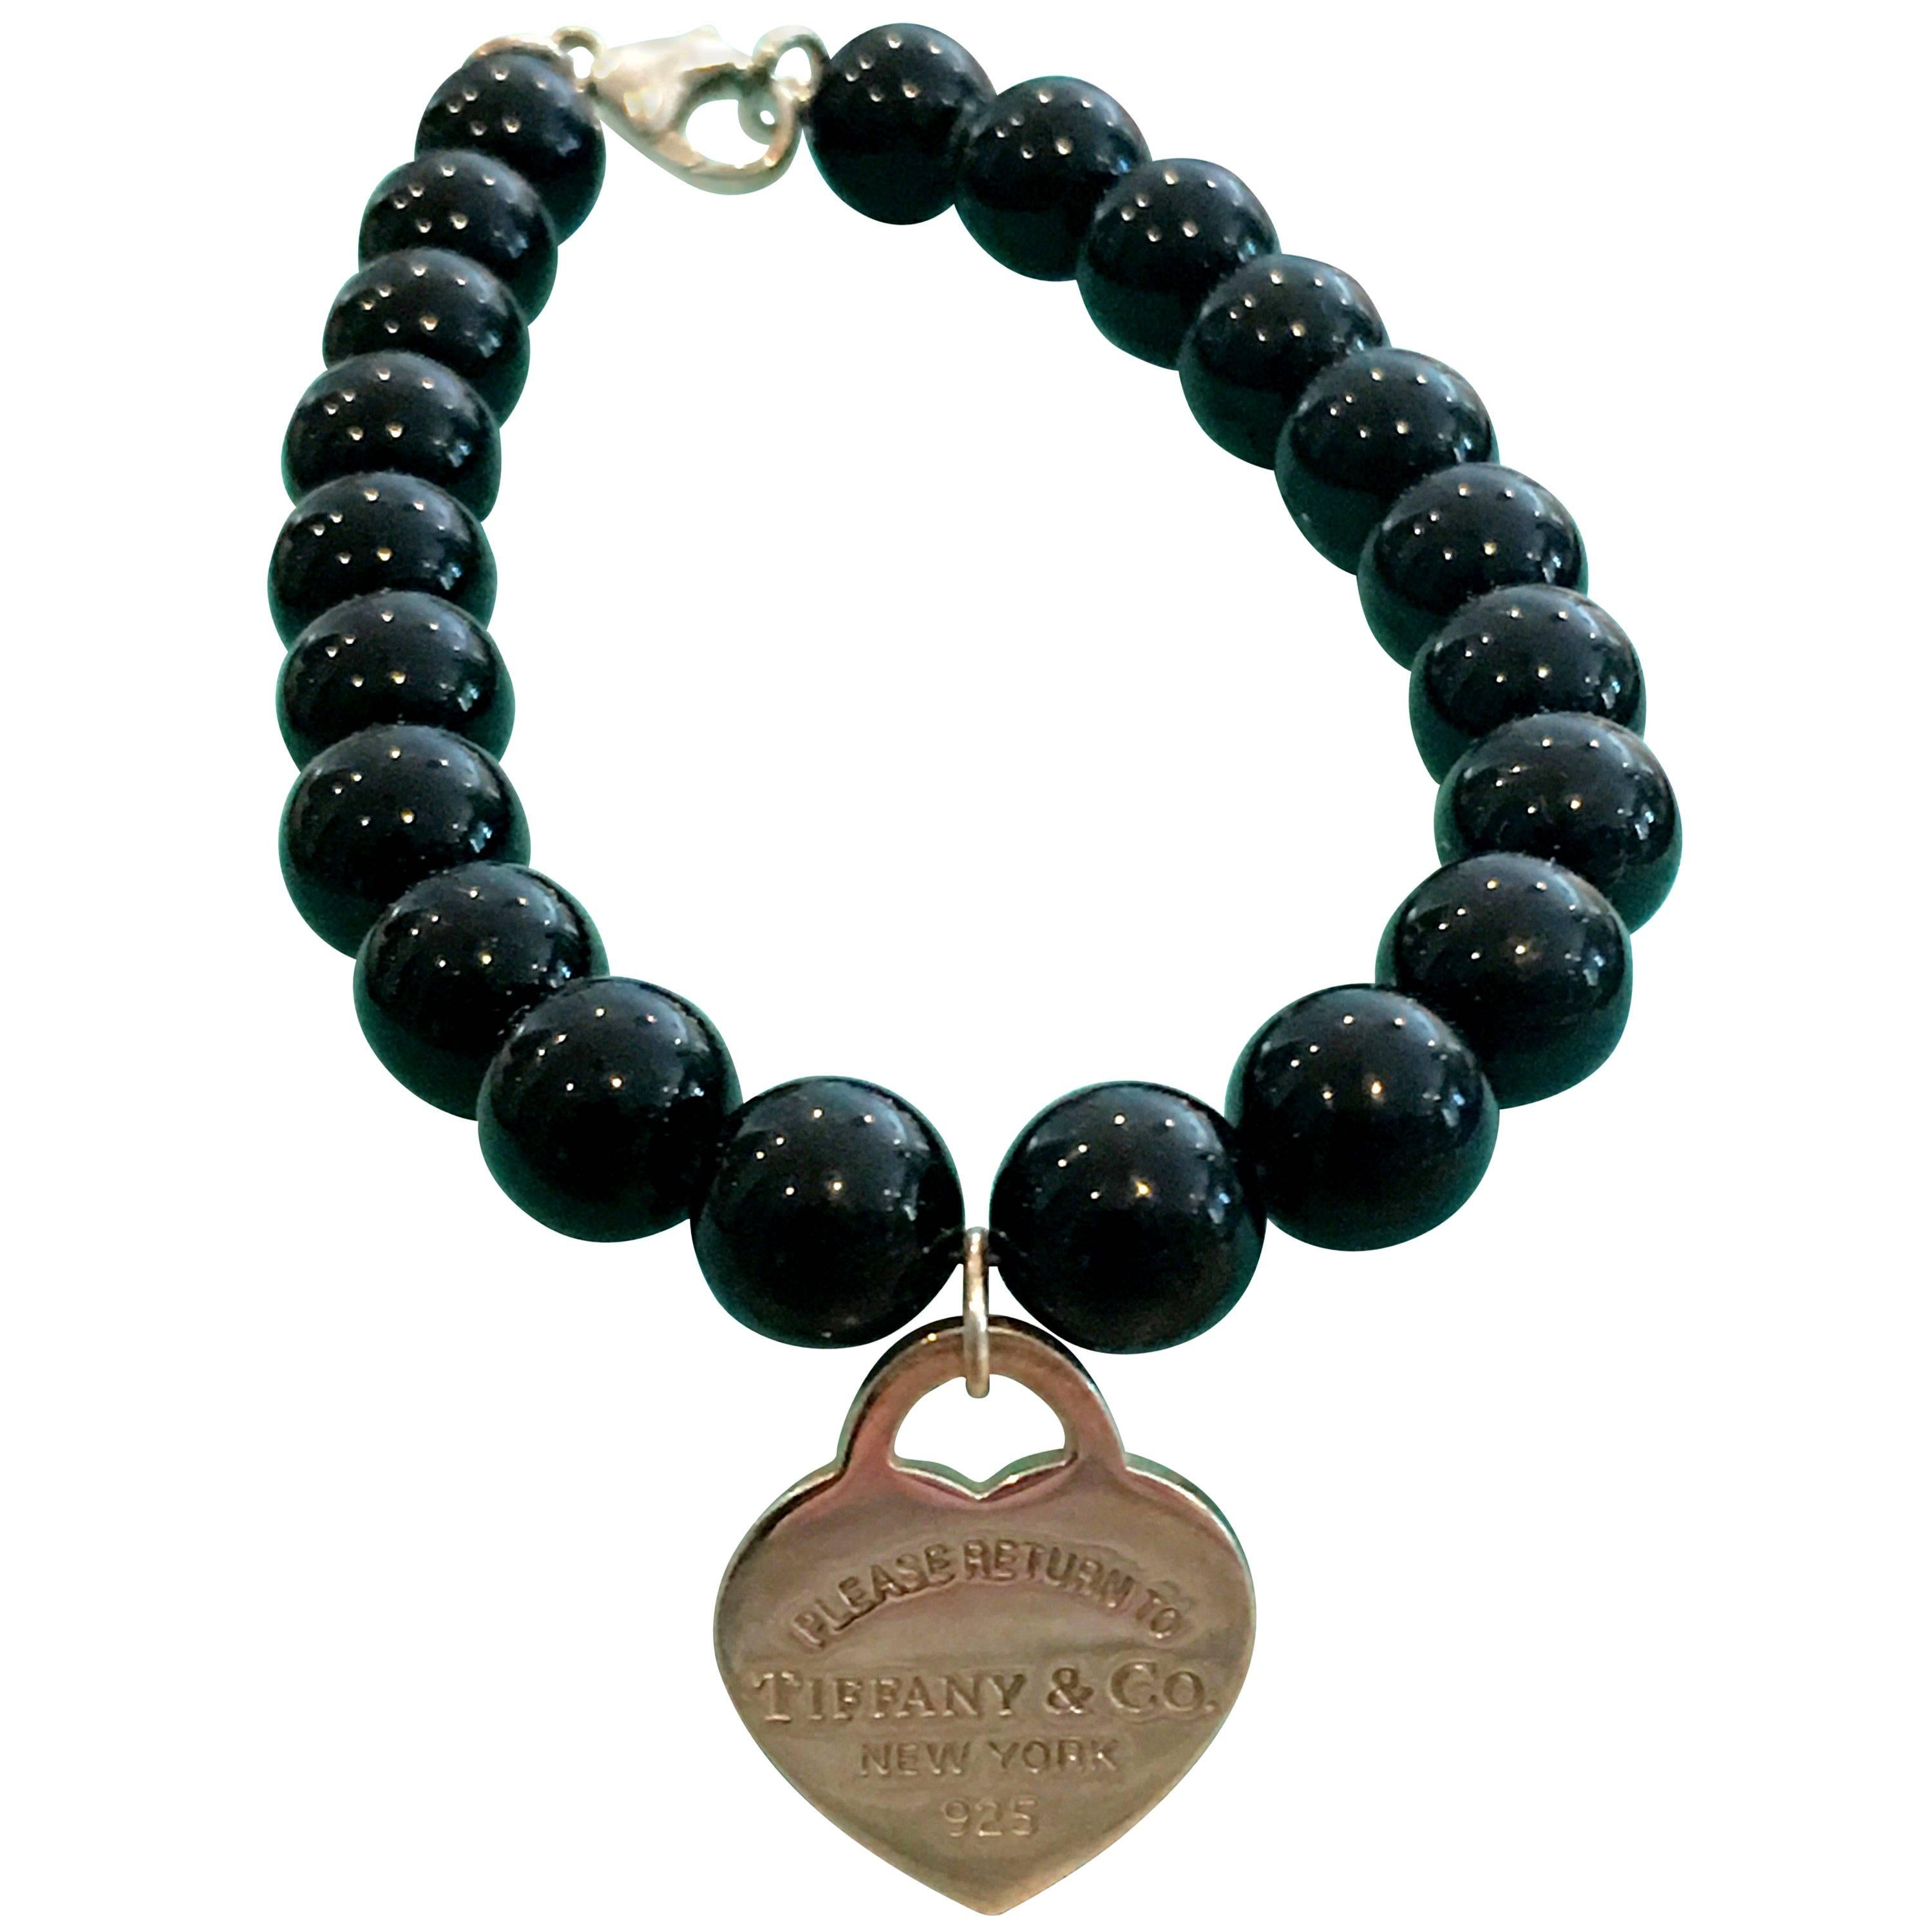 Tiffany & Co. Silver Heart Tag 7.5' Black Onyx Bead Bracelet